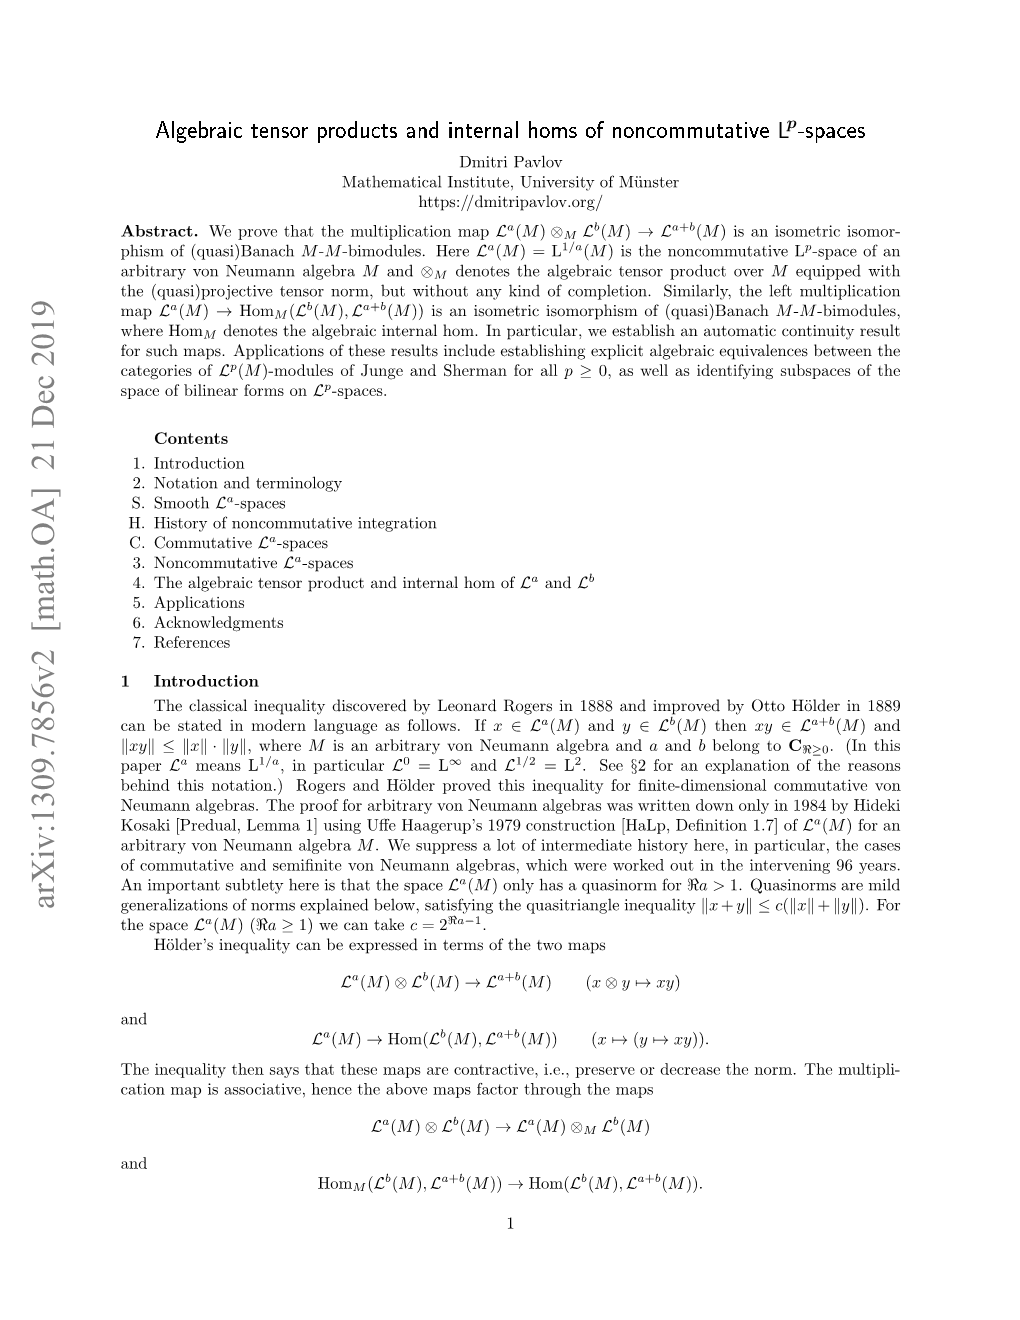 Algebraic Tensor Products and Internal Homs of Noncommutative L^ P